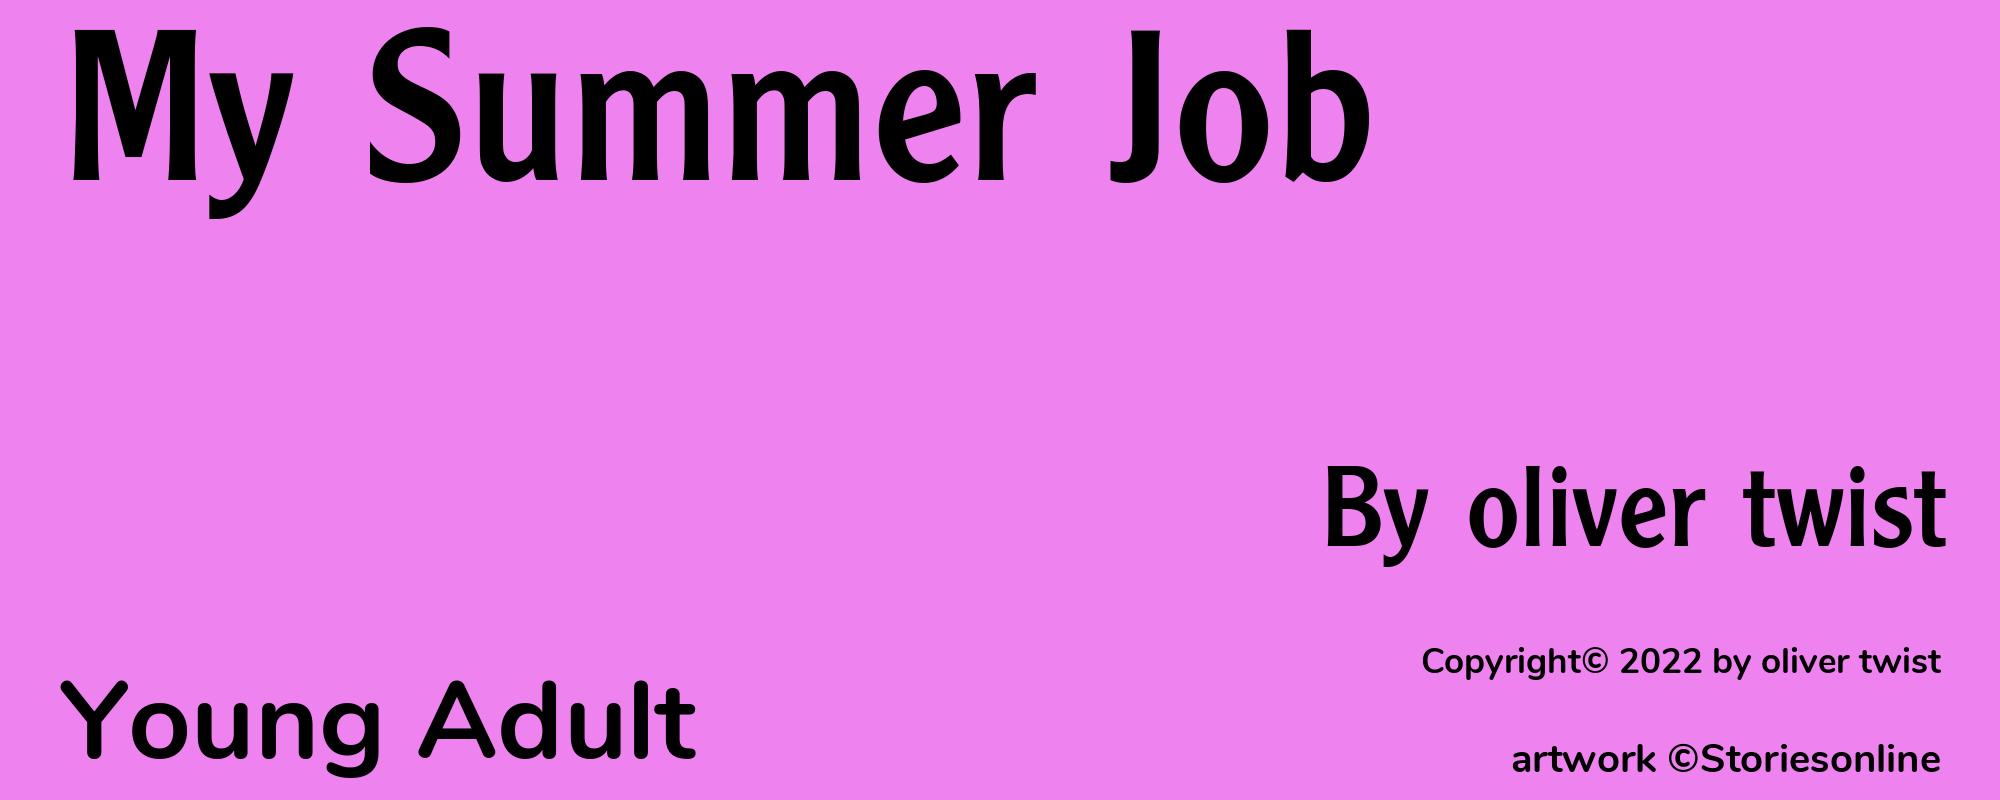 My Summer Job - Cover